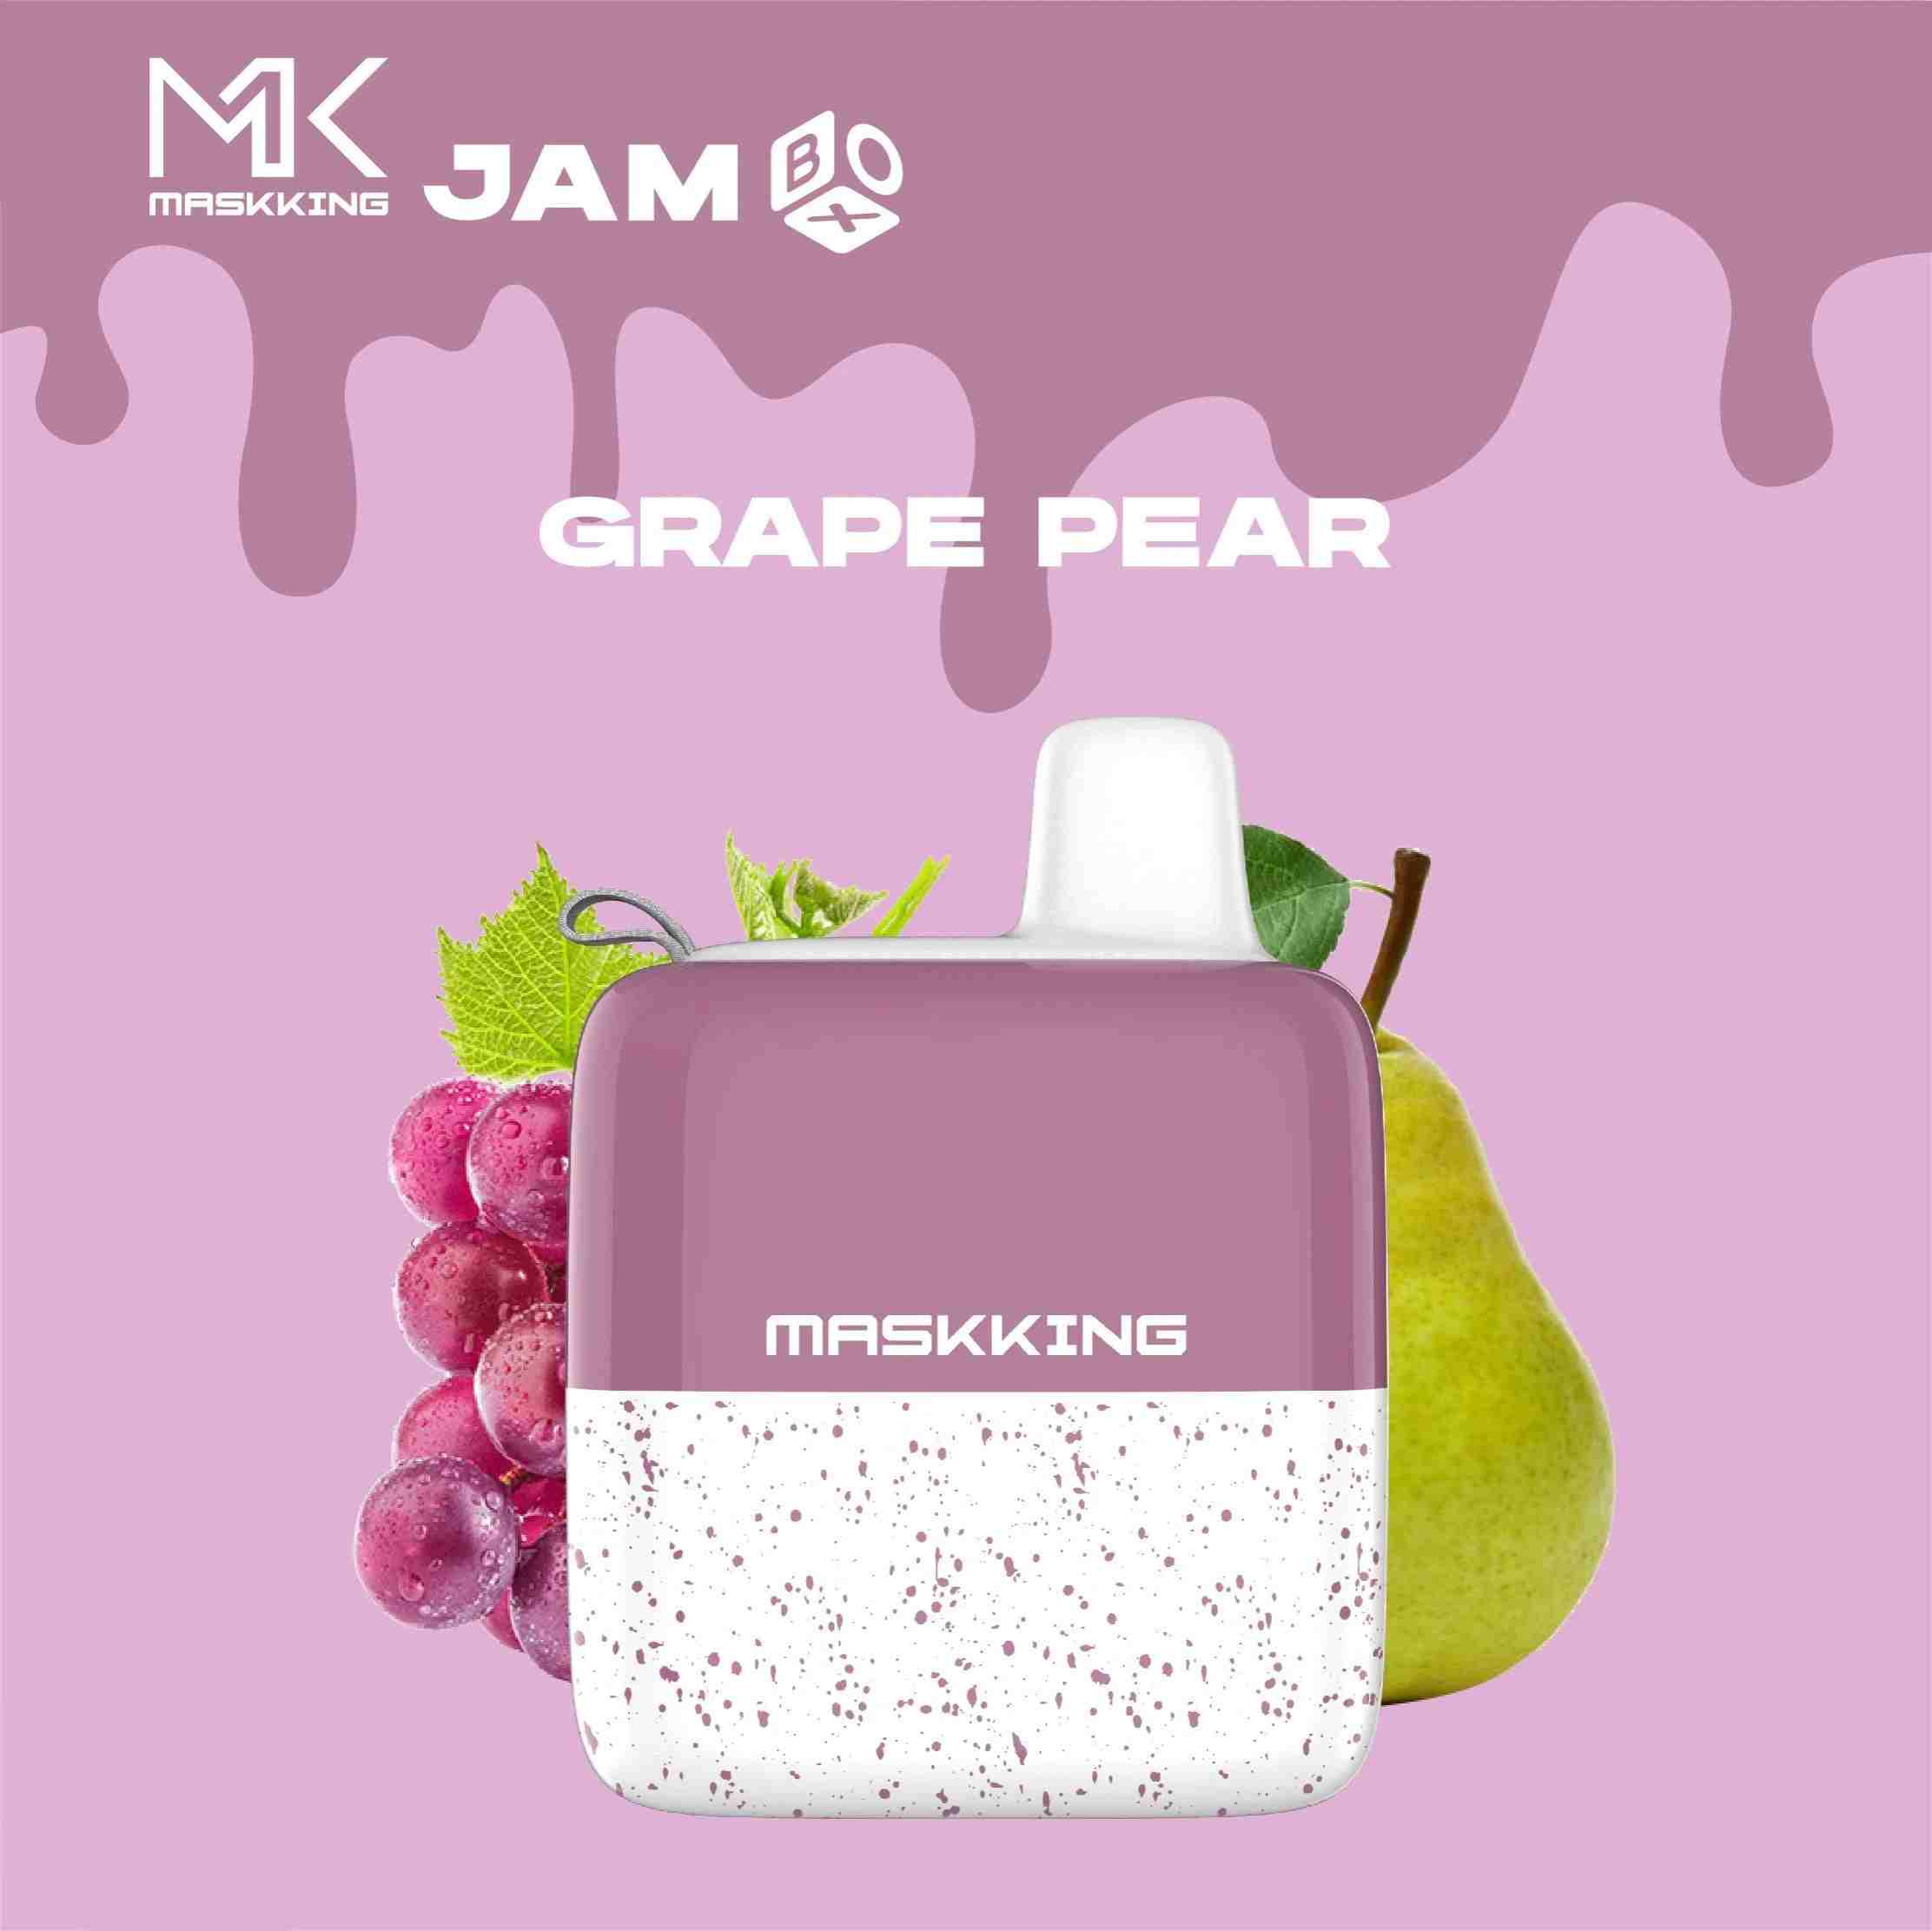 Maskking Jam Box - Grape Pear